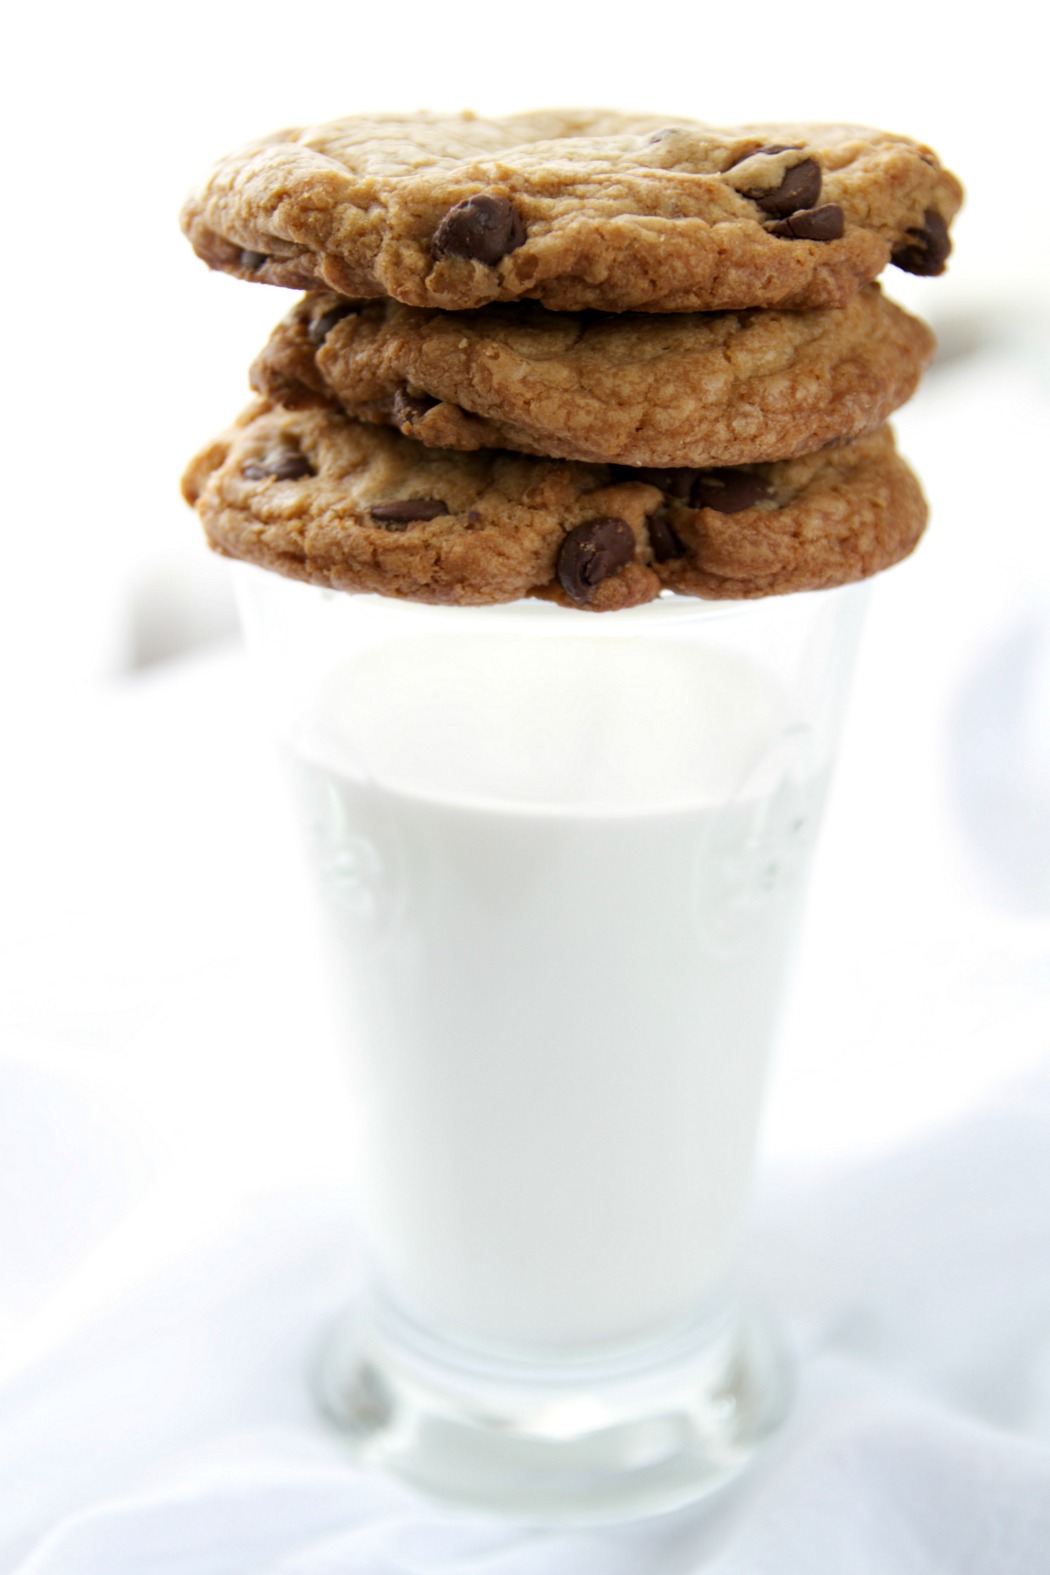 Alton Brown’s Chewy Chocolate Chip Cookie Recipe » Just a Smidgen